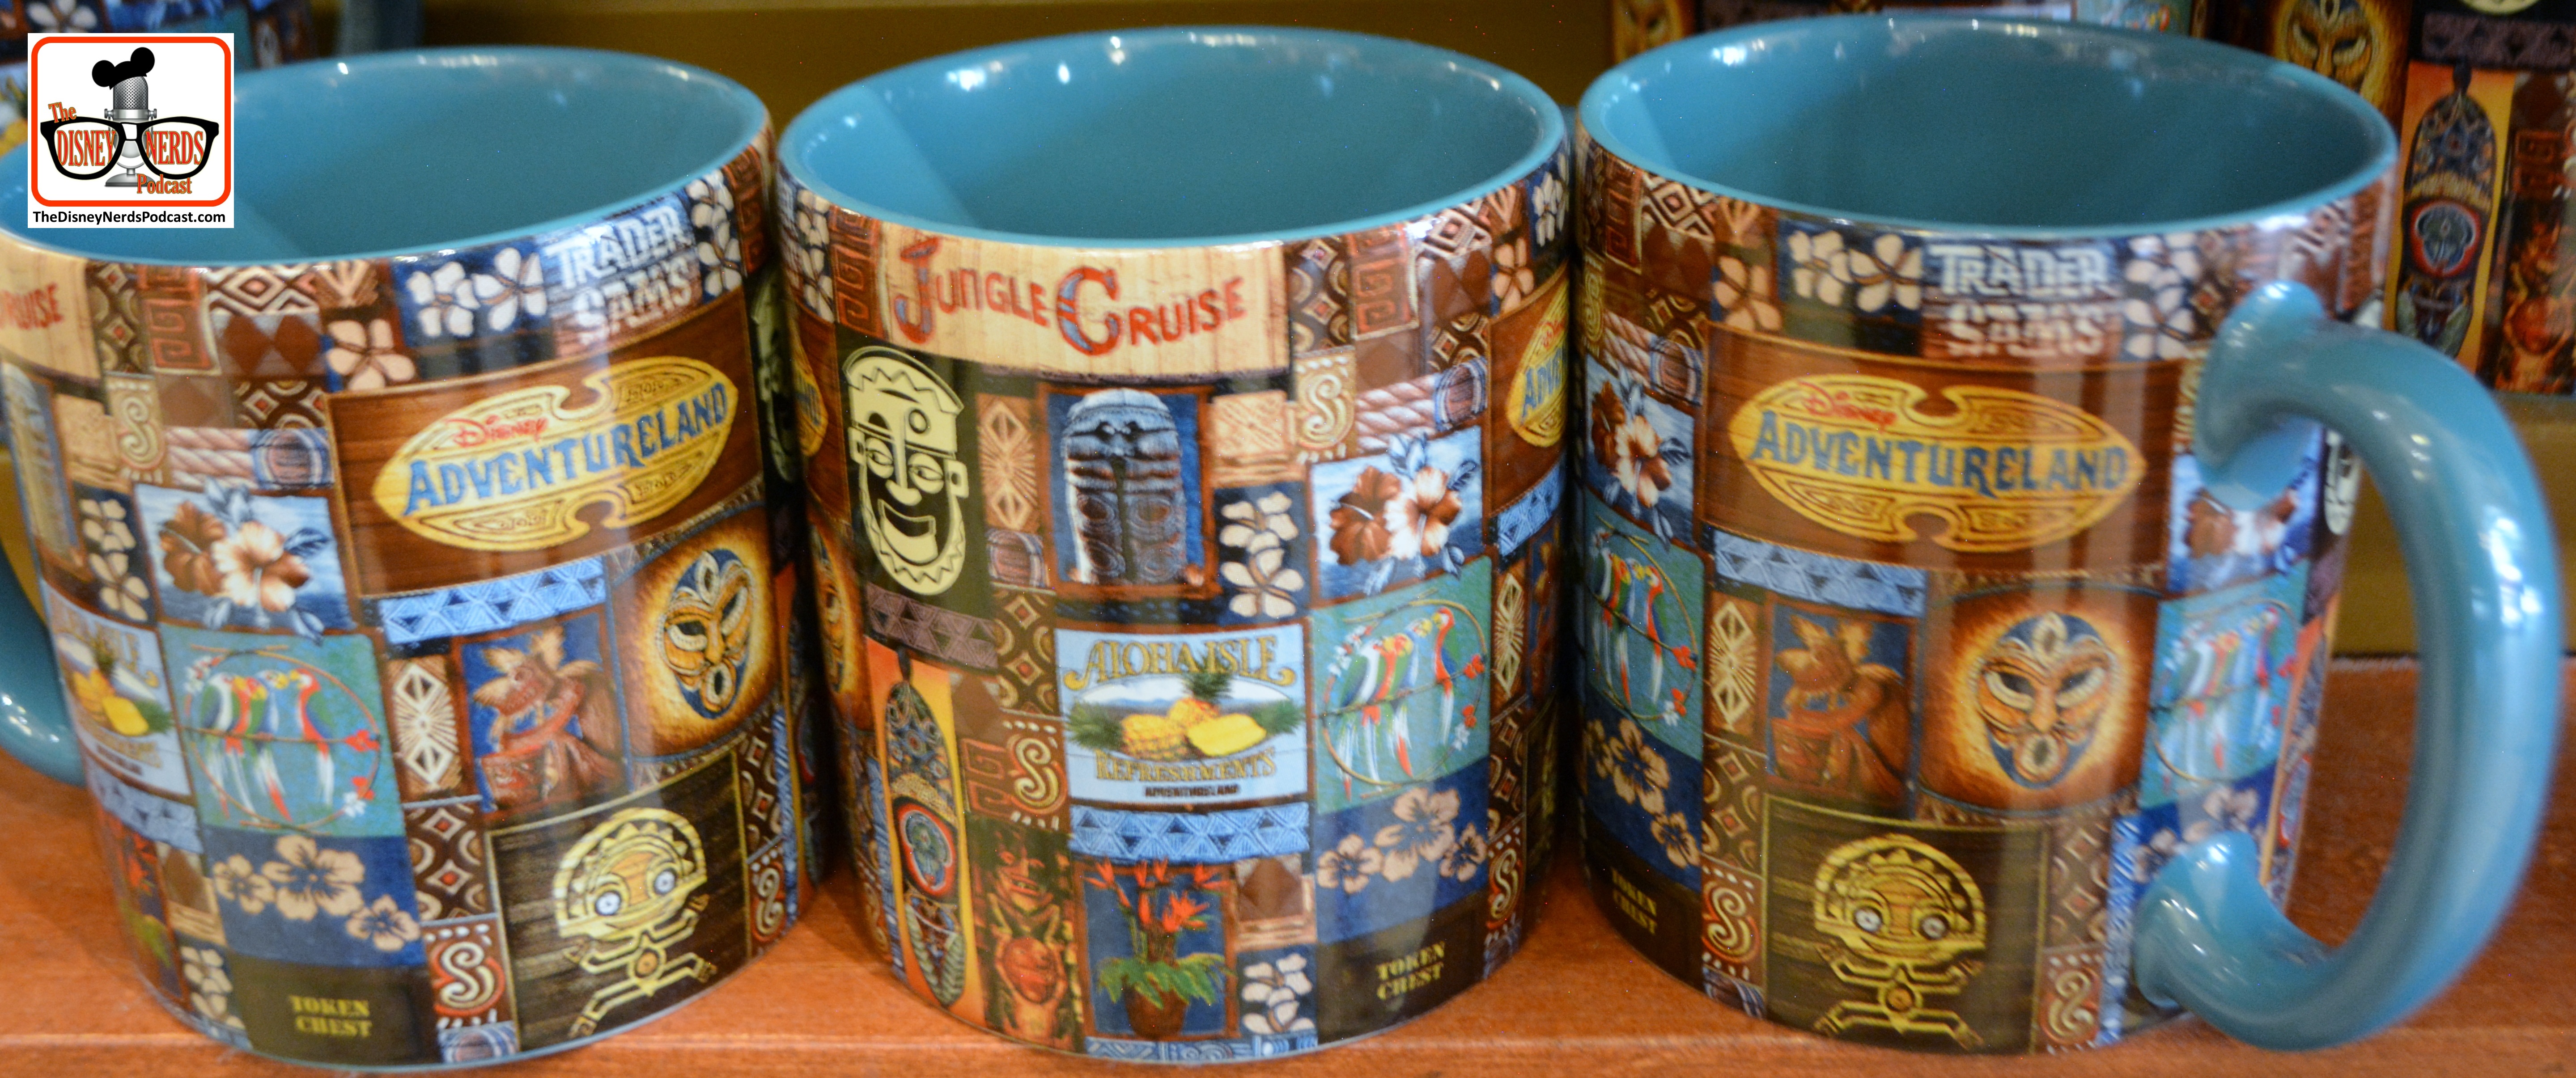 Adventureland themed coffee Mug